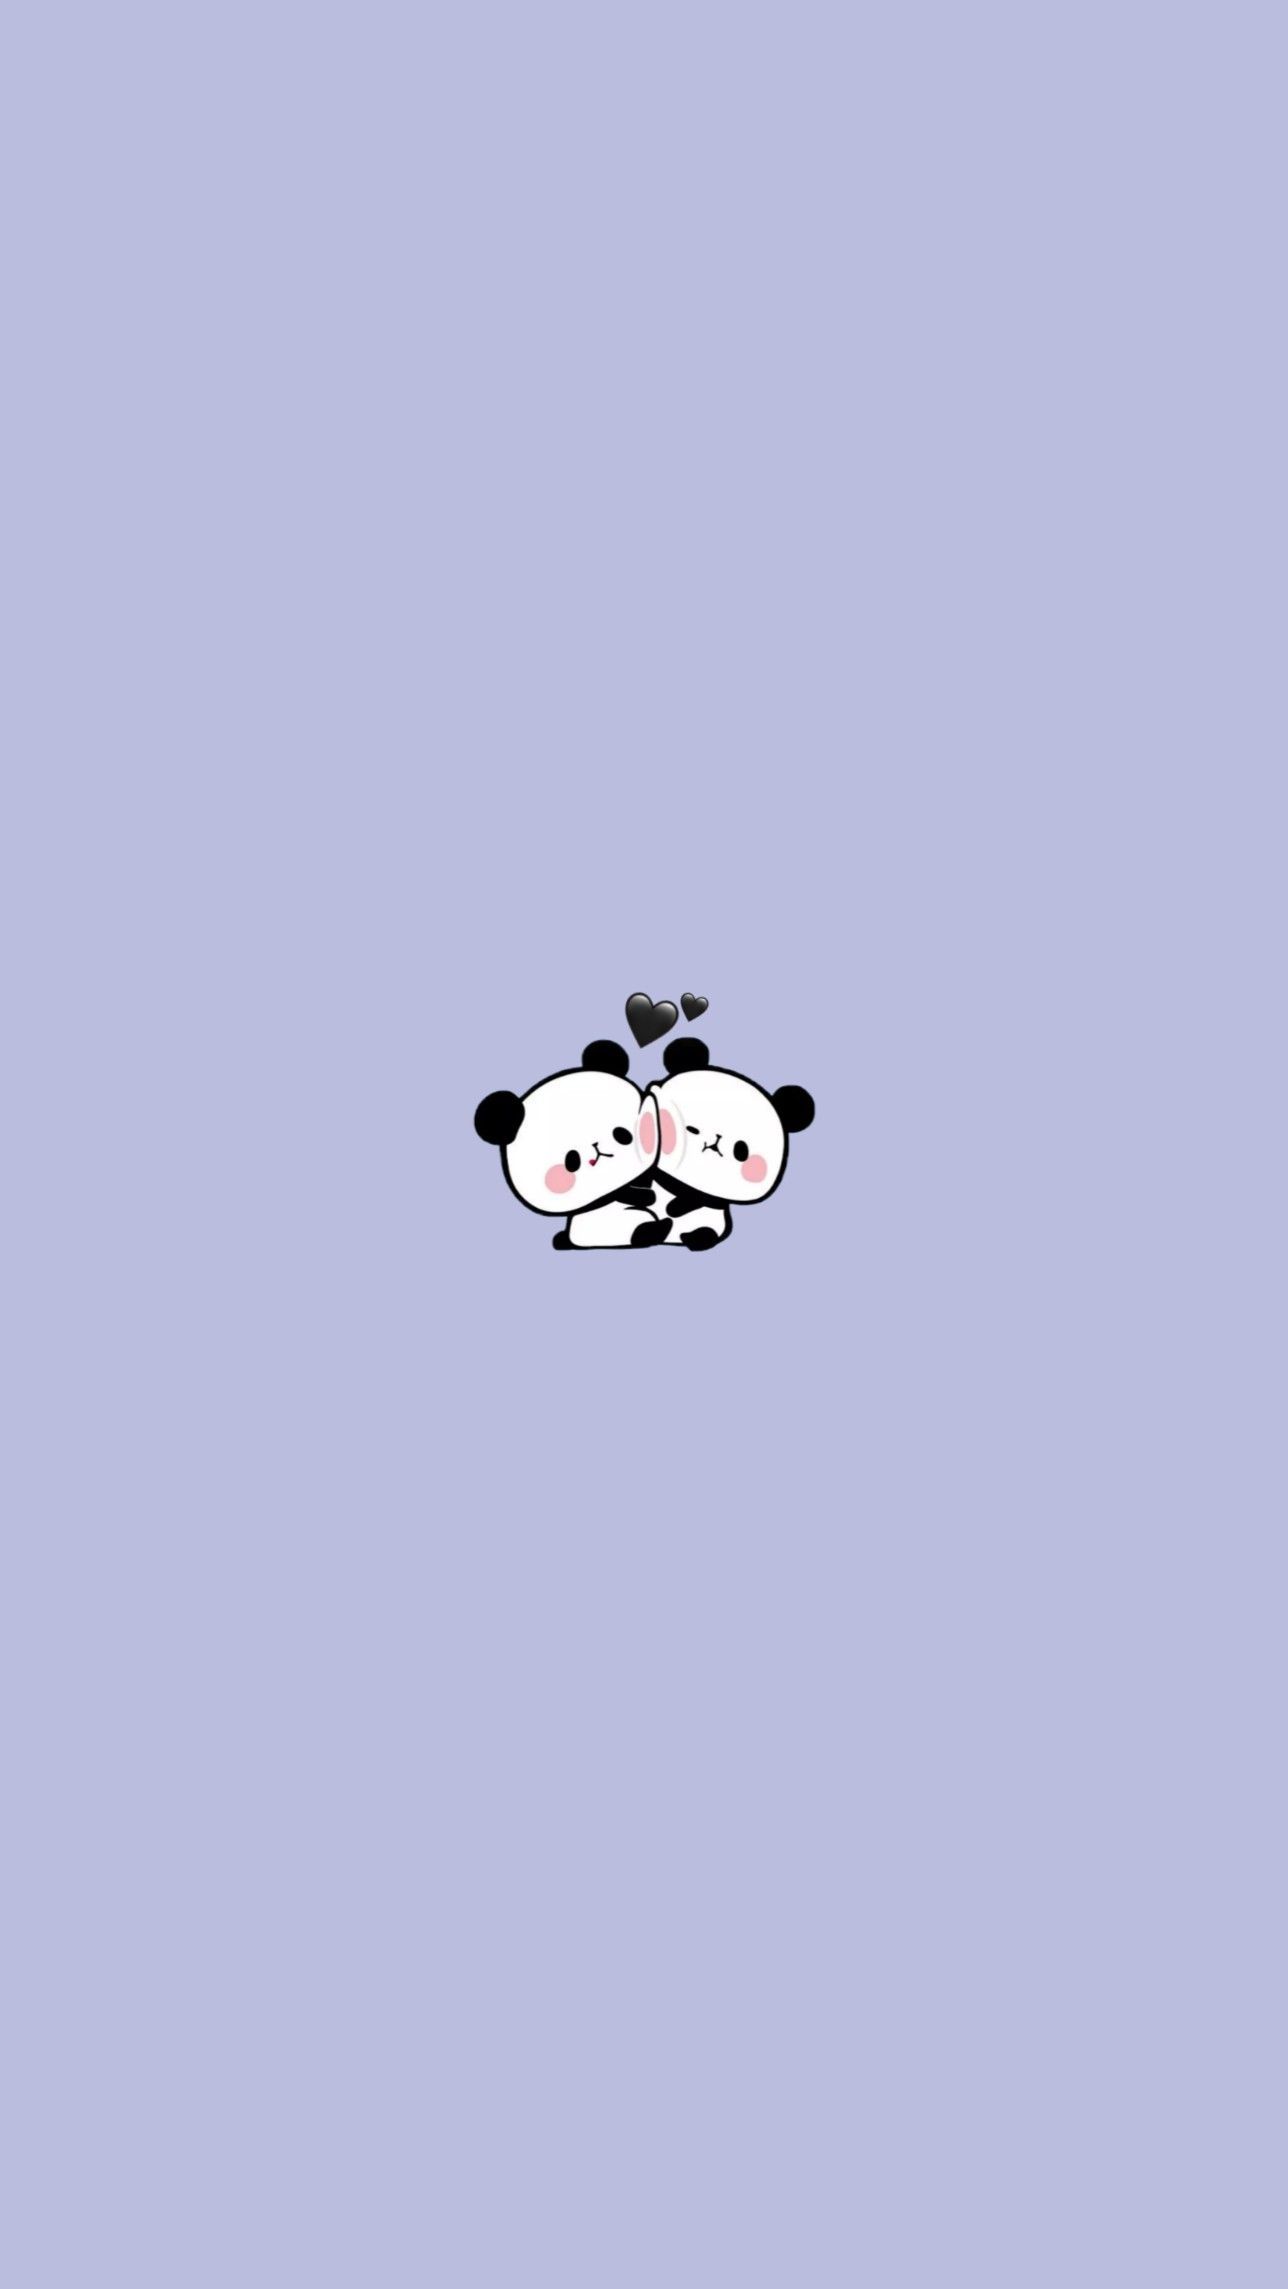 A panda bear and its partner are kissing on the wall - Panda